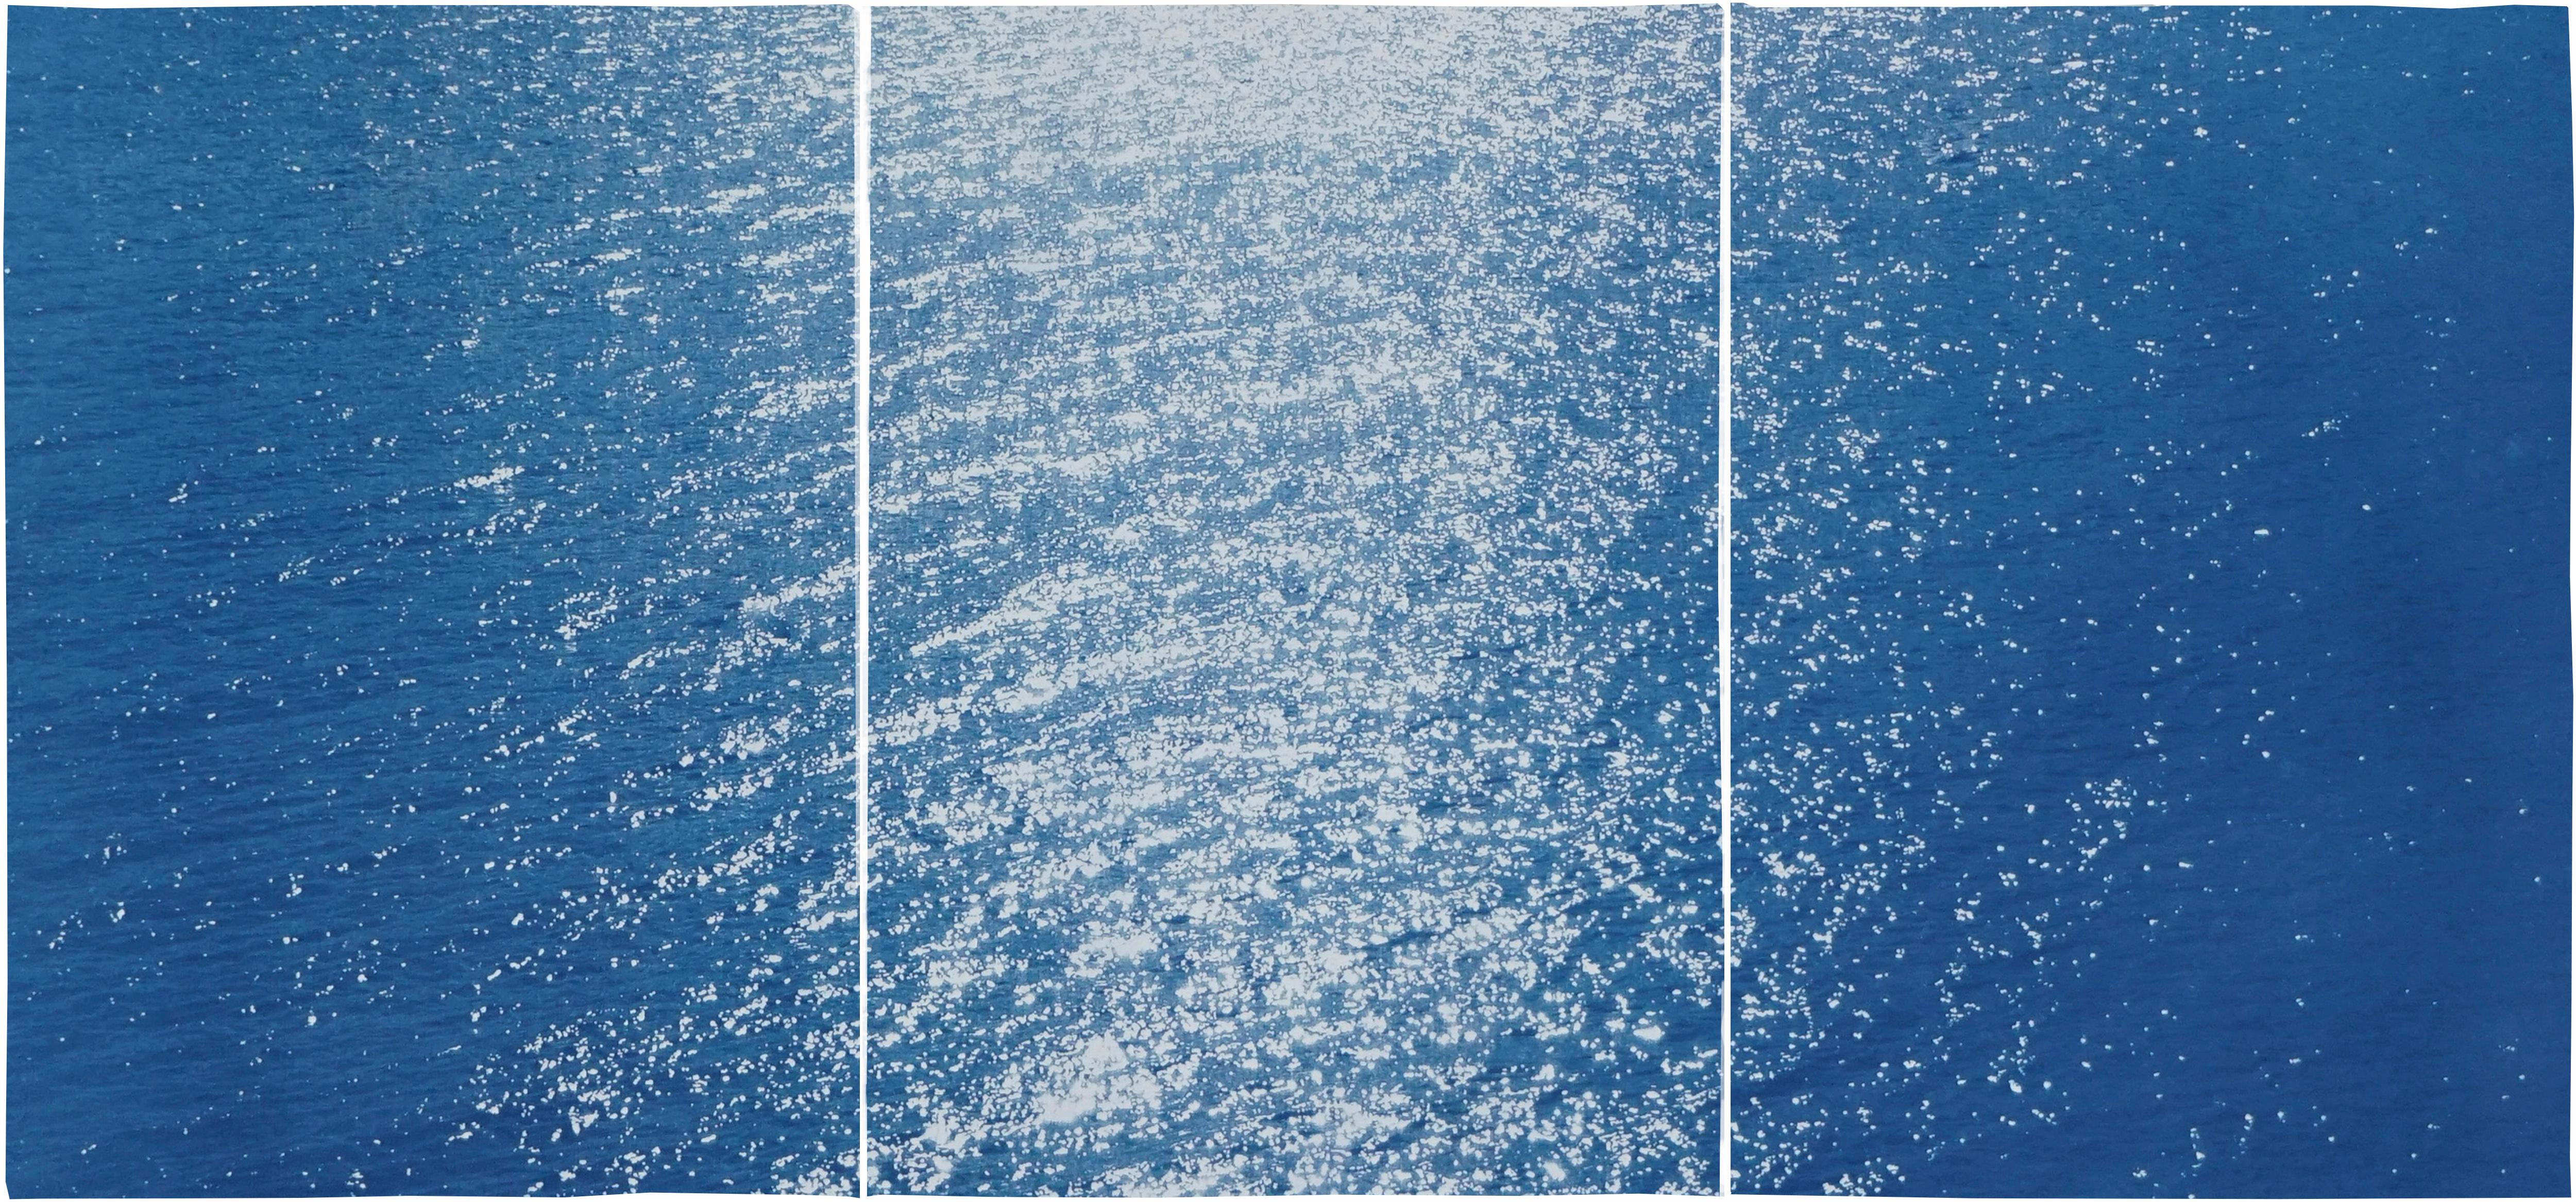 Kind of Cyan Abstract Print - Splendorous Amalfi Coast Seascape , Colossal Cyanotype Triptych on Paper, 2020